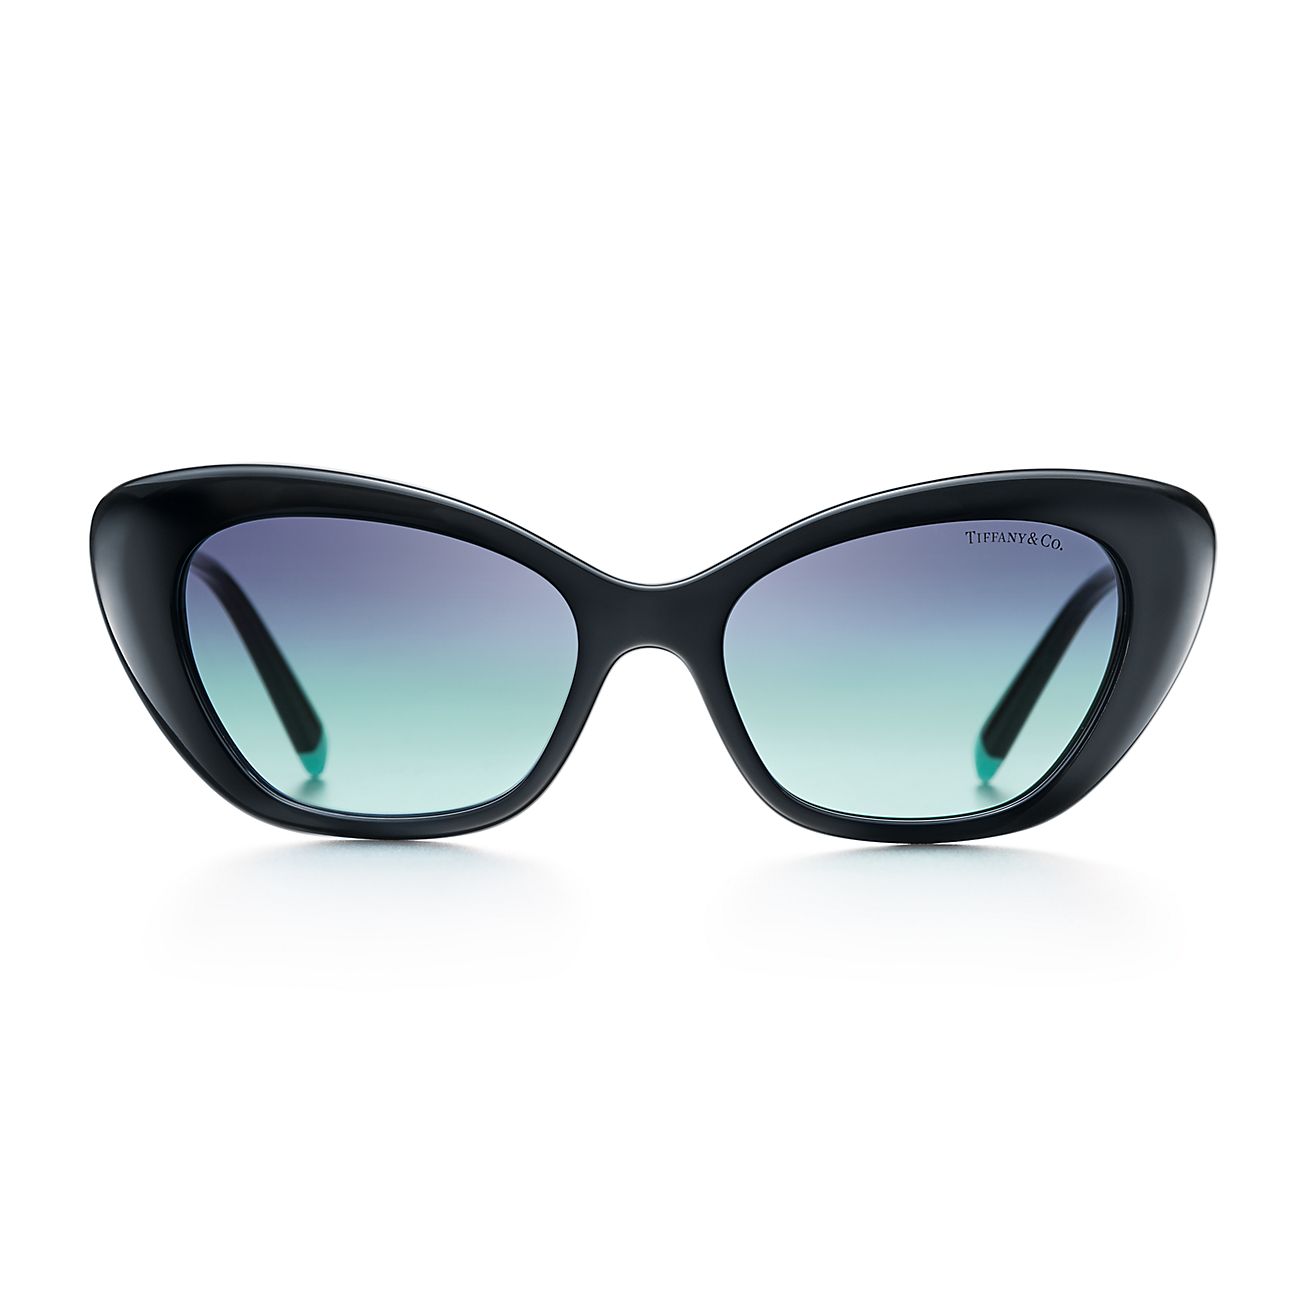 Diamond Point cat eye sunglasses in 